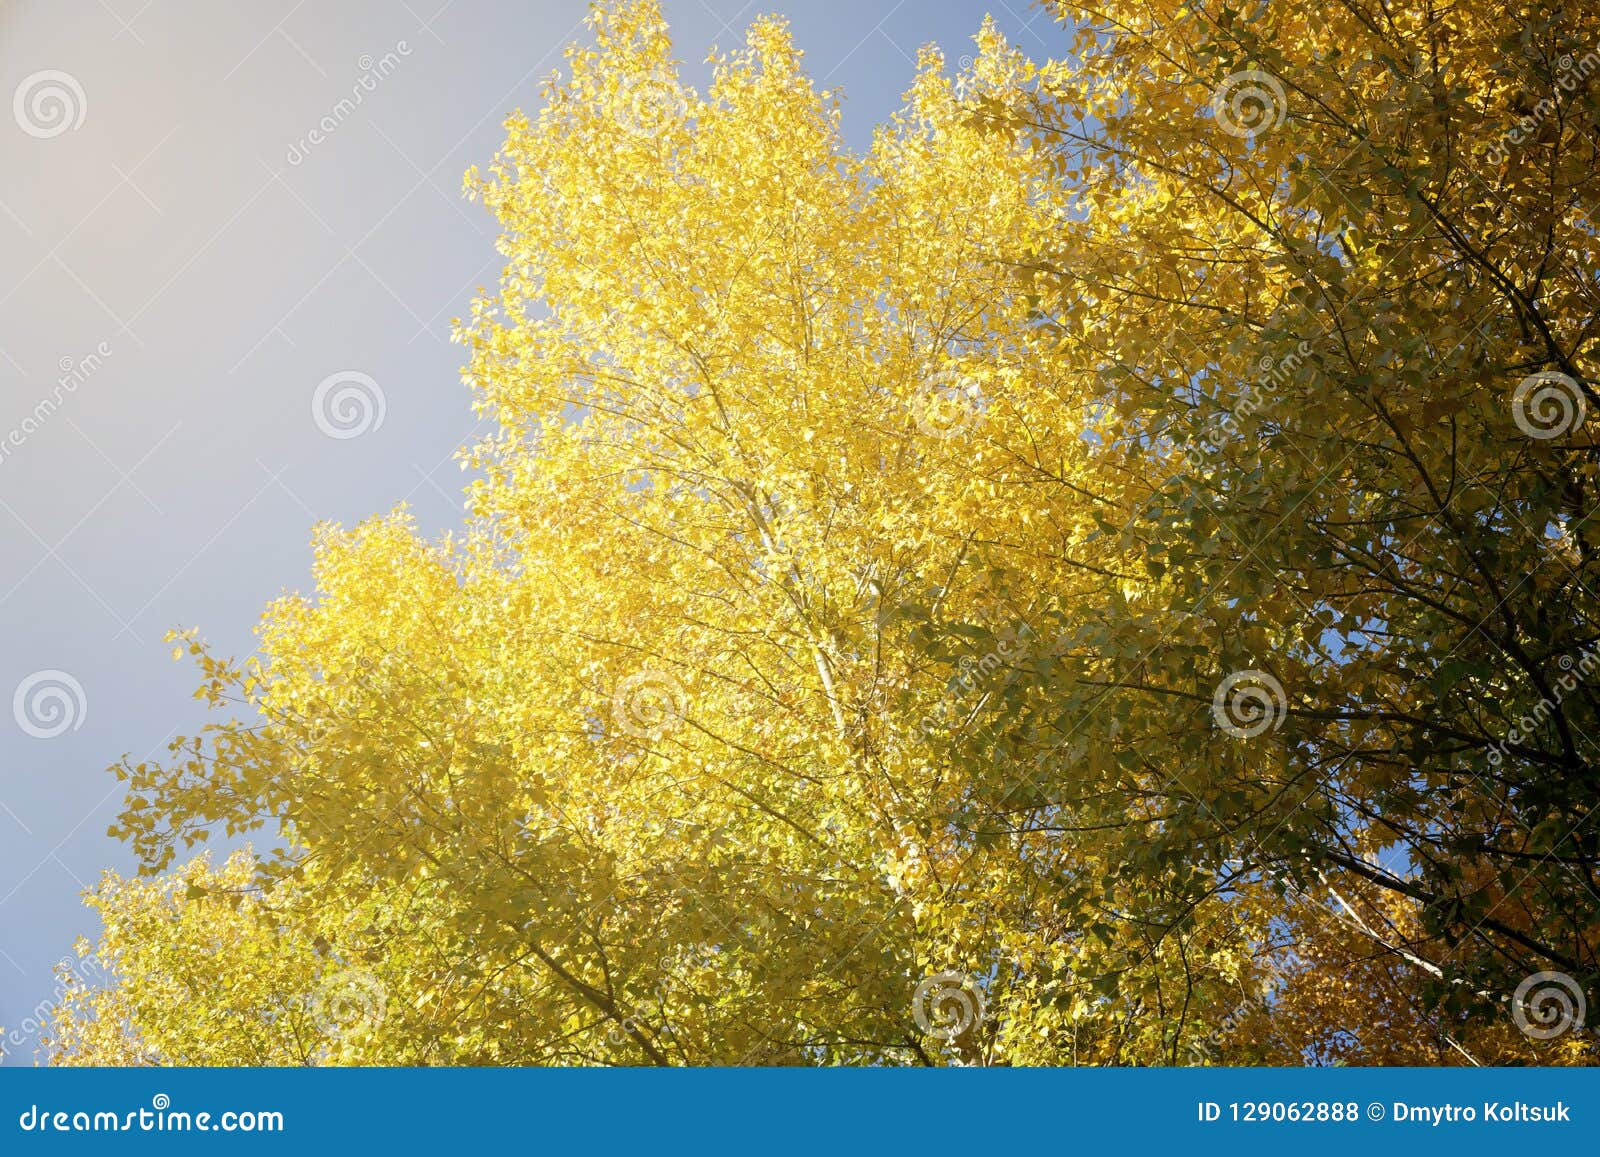 Autumn City Park Fall Colors, Four Seasons Stock Photo - Image of ...